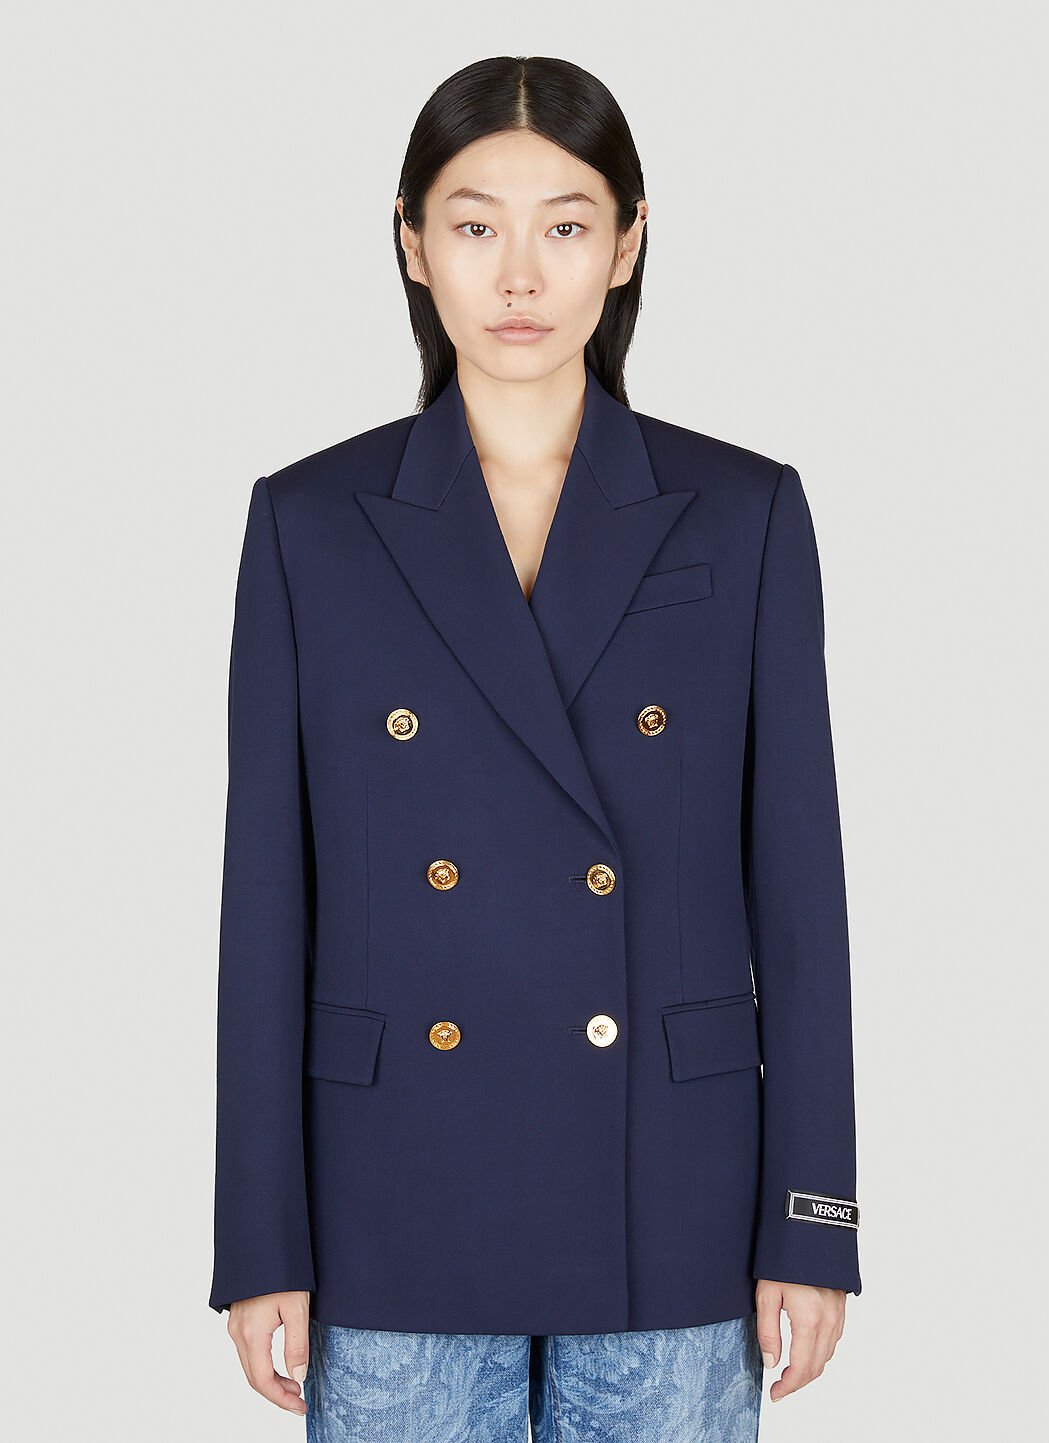 Versace 修身男性化双排扣西装外套 蓝色 ver0255008